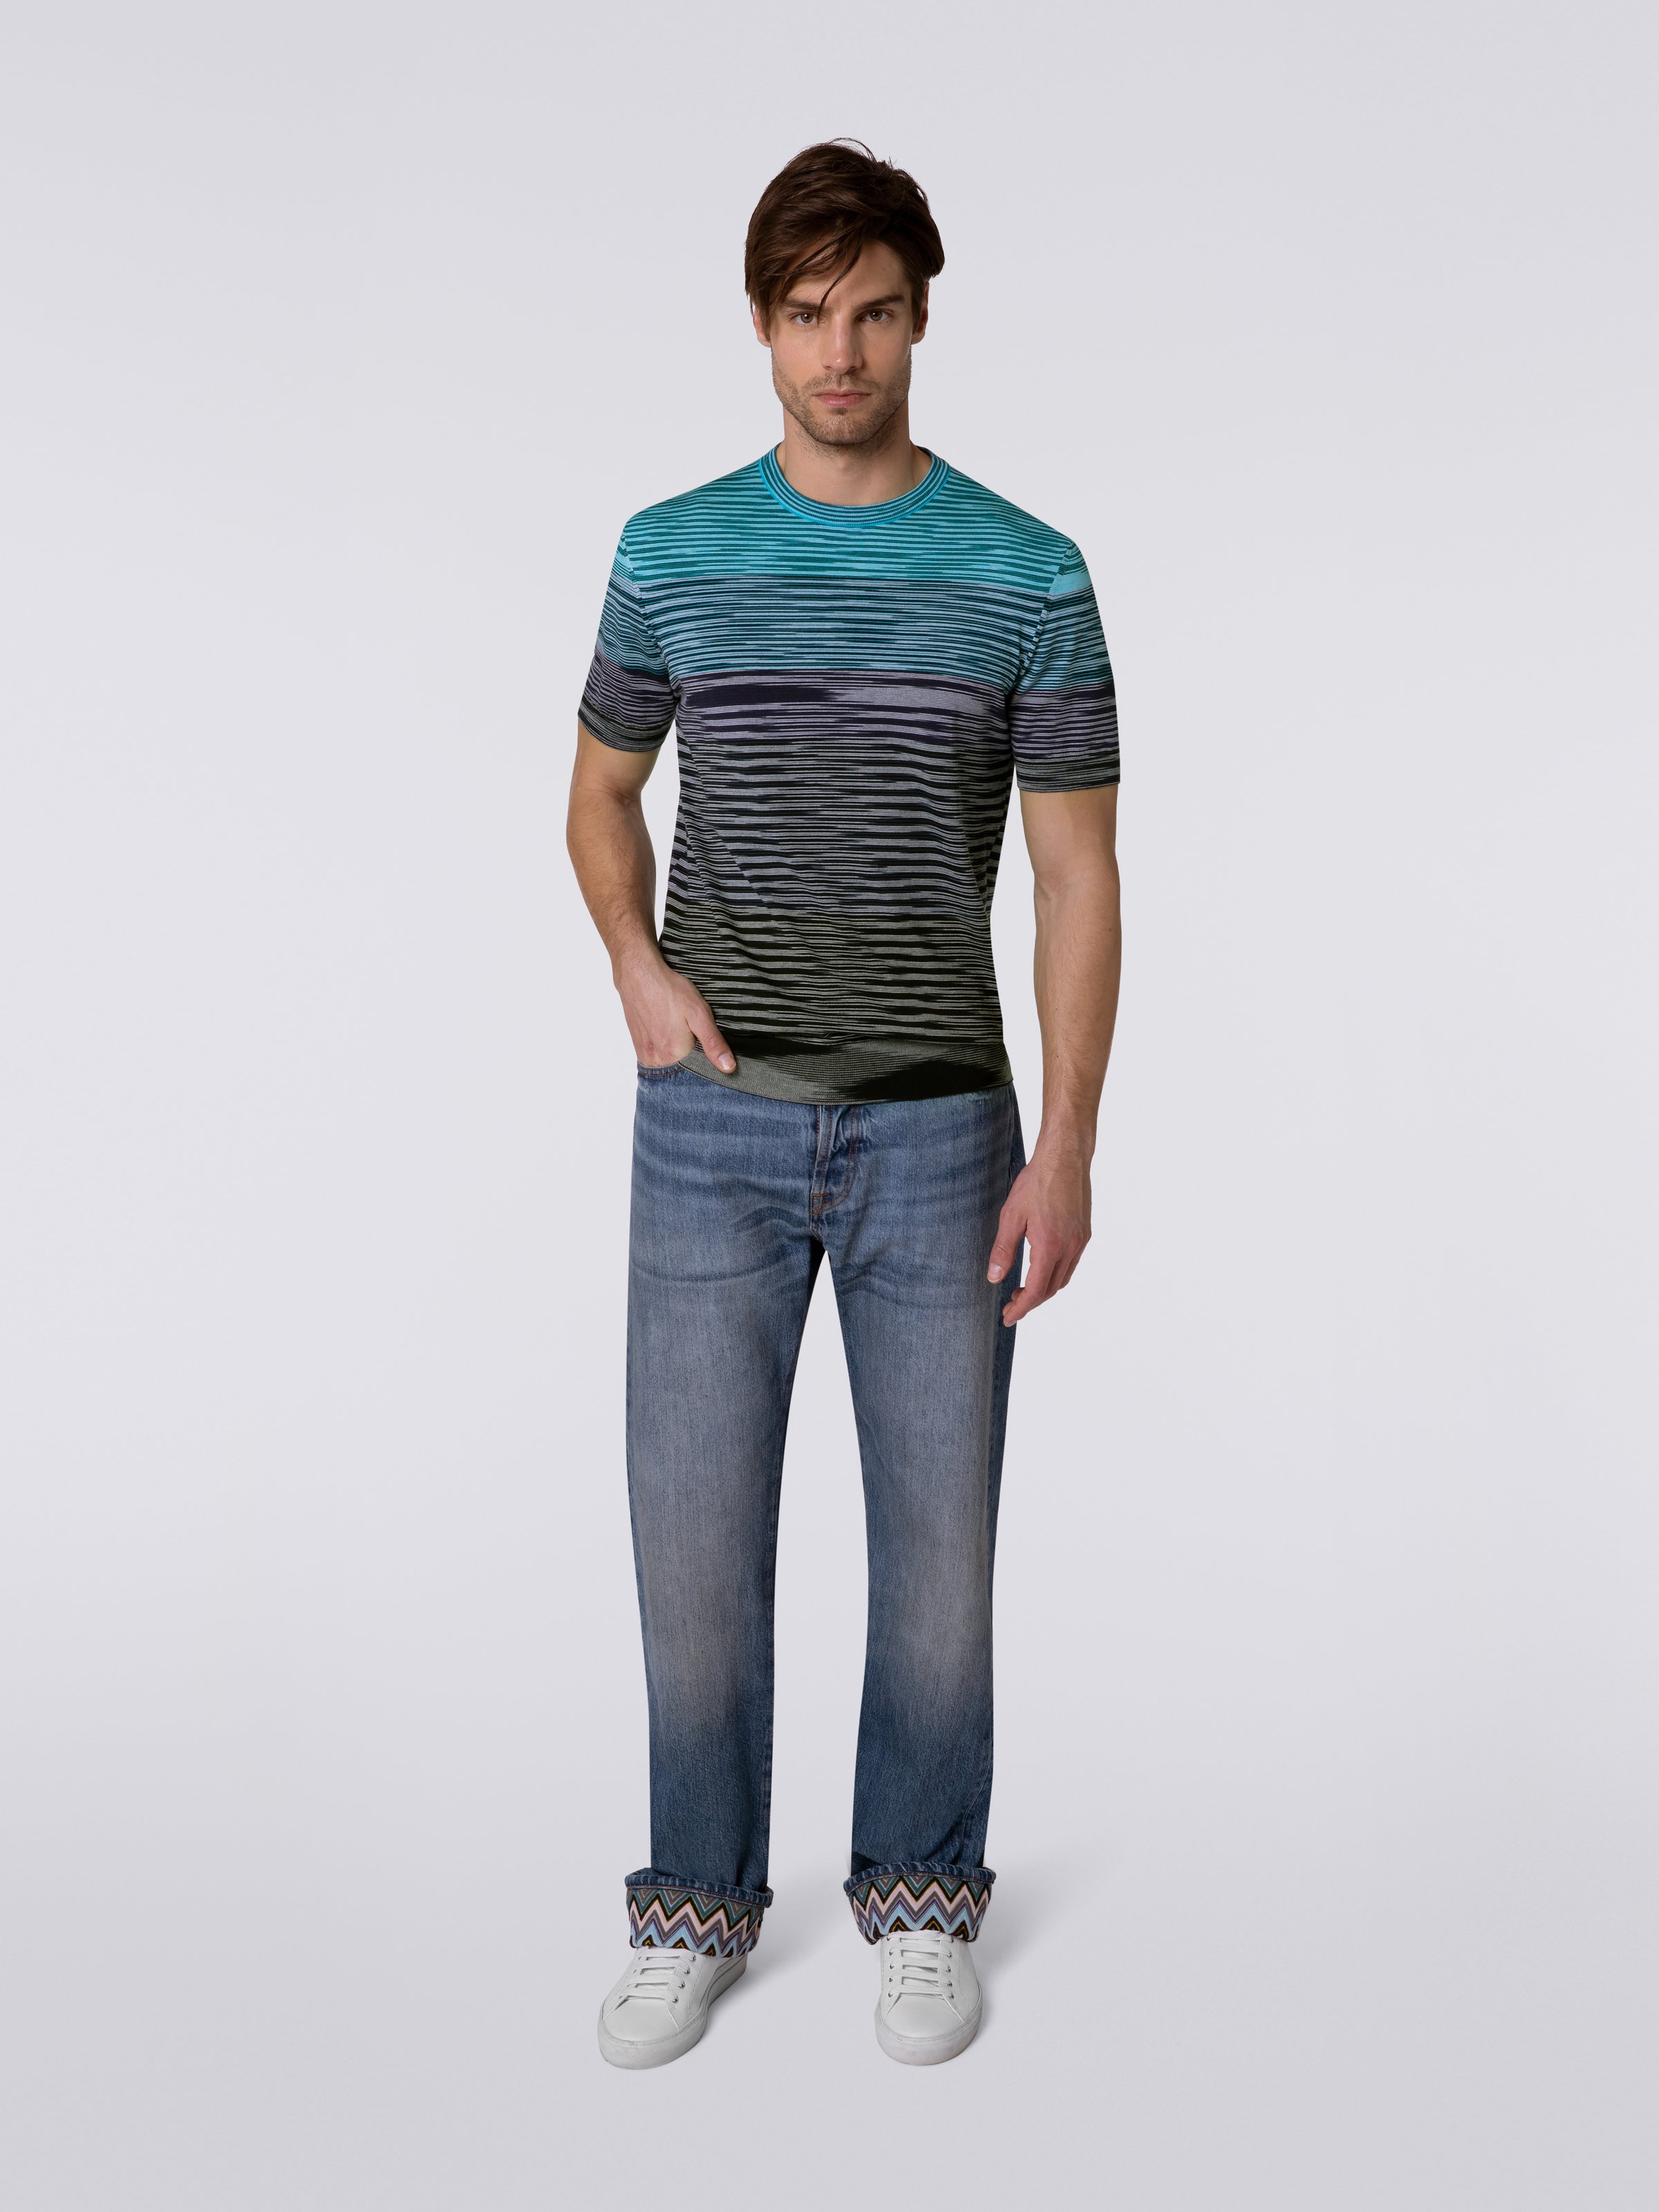 Camiseta de cuello redondo y manga corta en punto de algodón a rayas degradadas, Azul Oscuro, Morado & Negro - 1